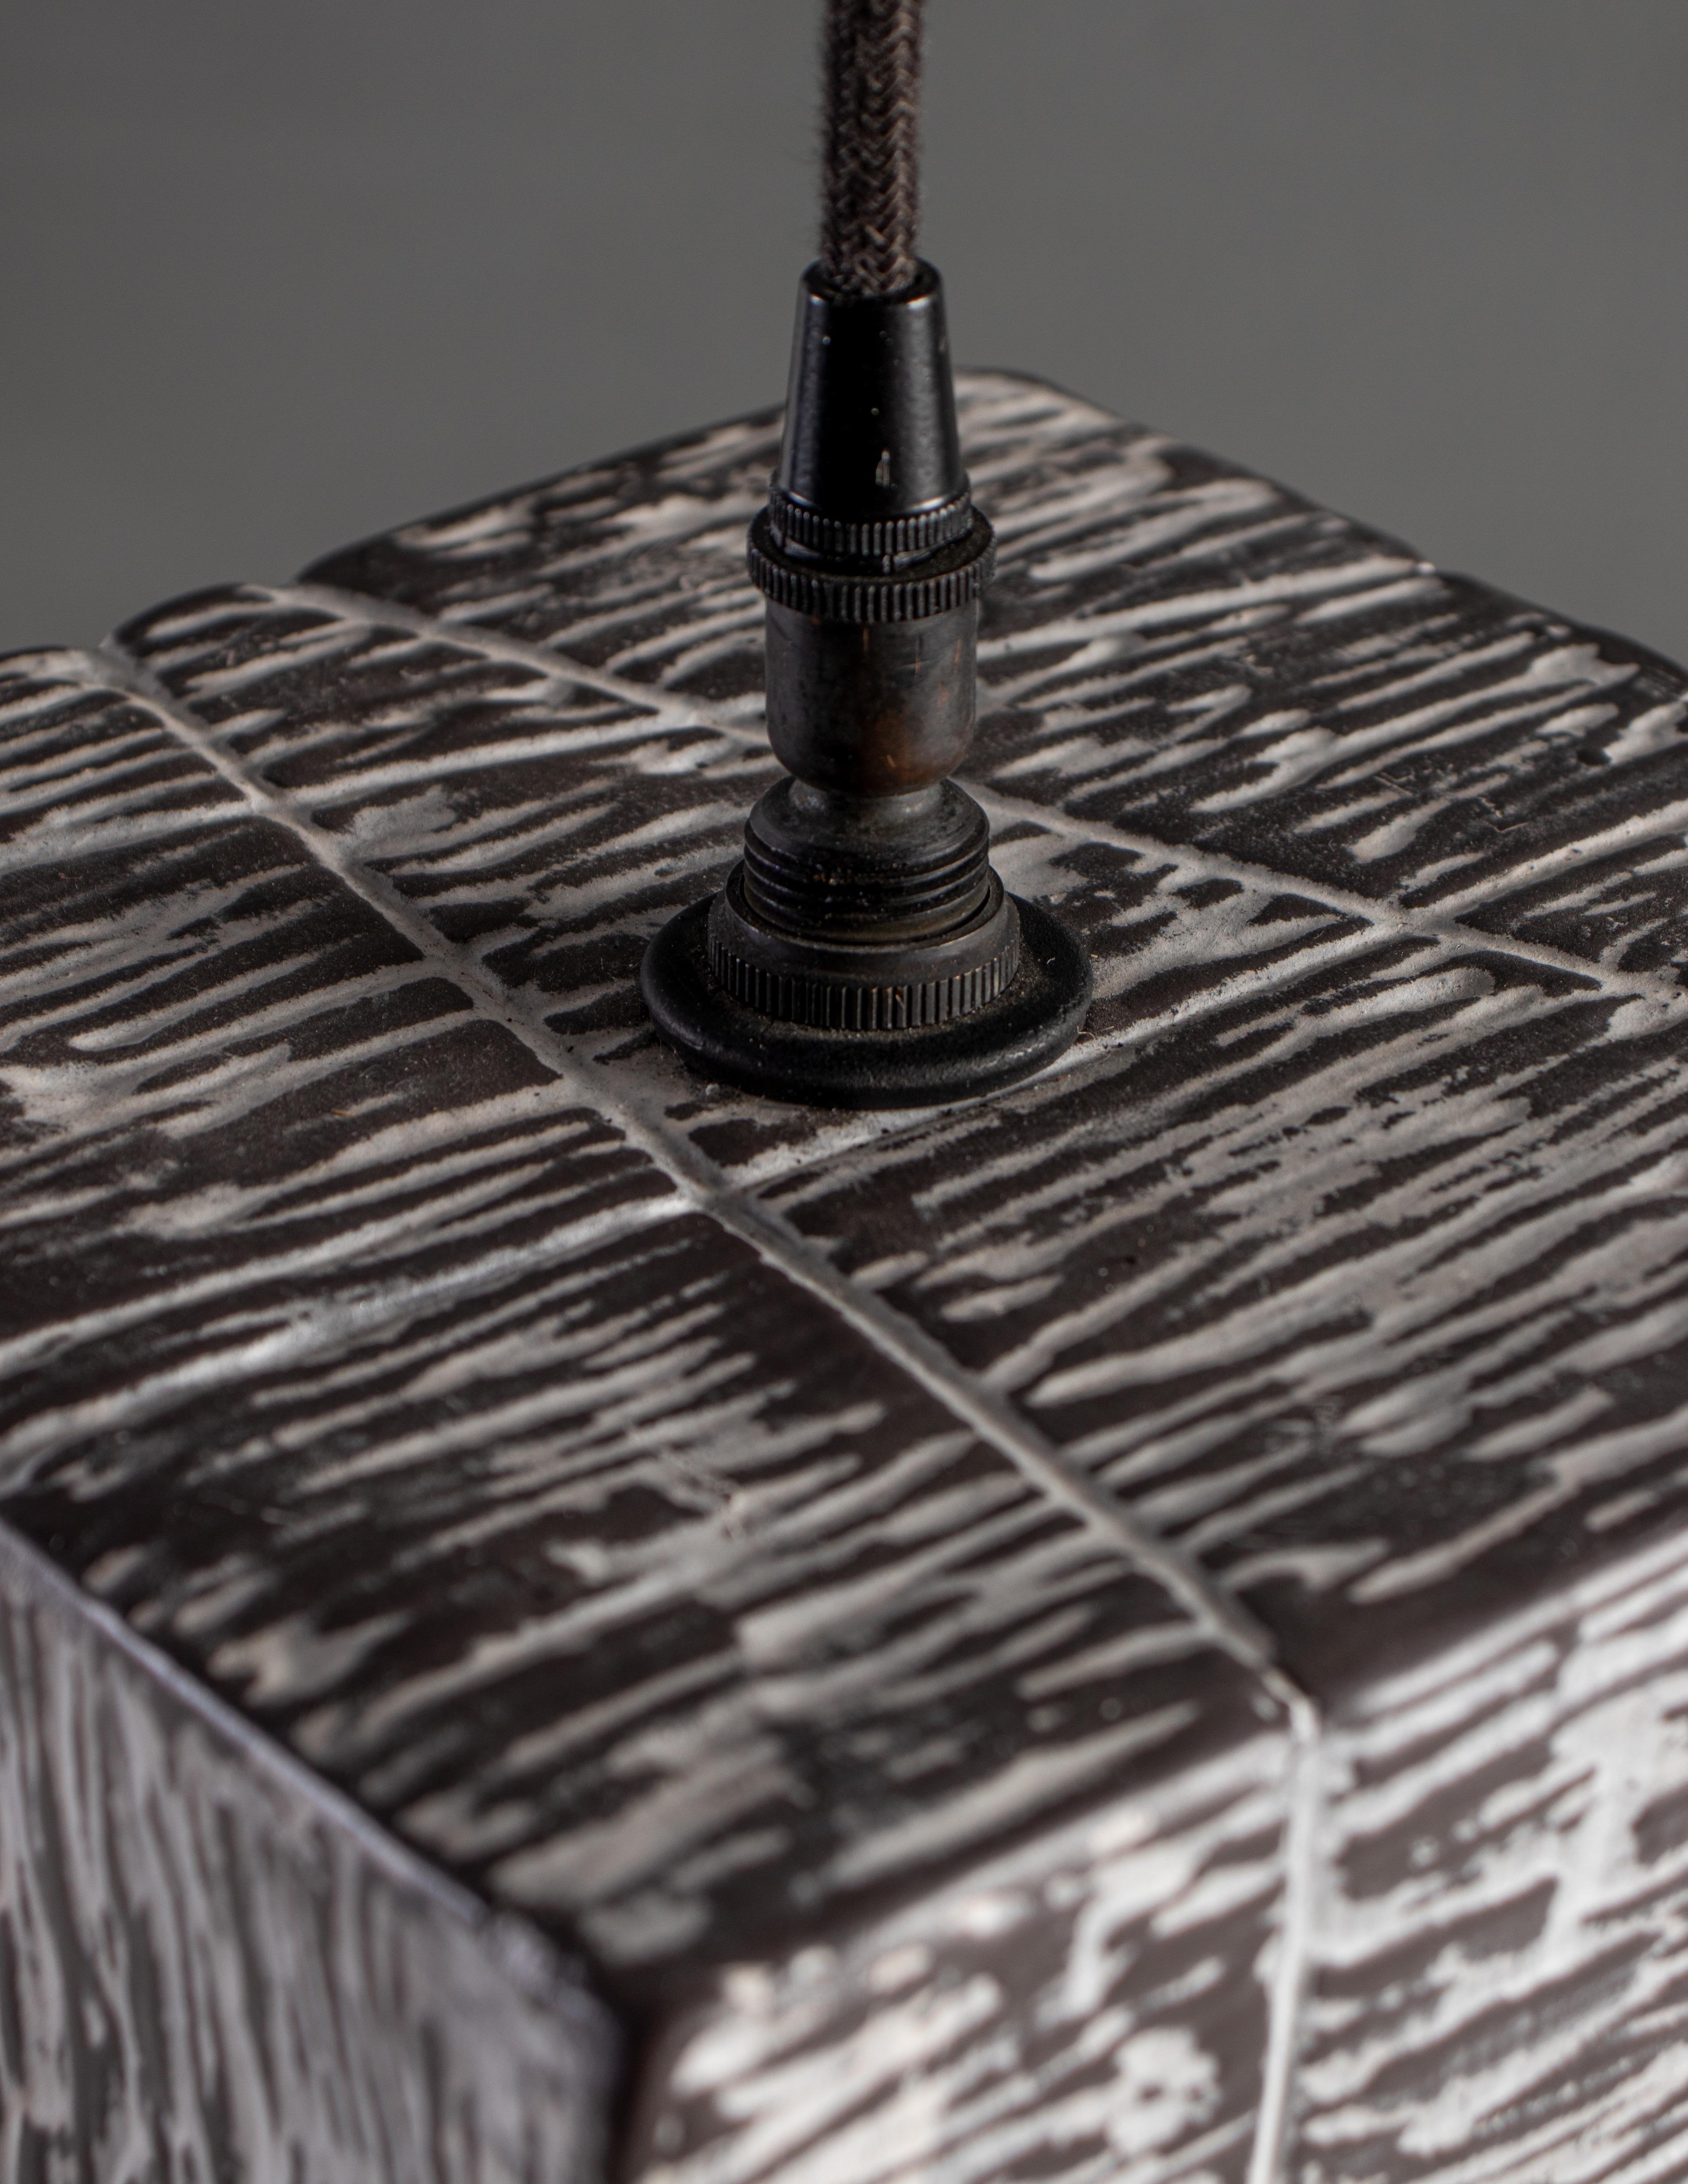 Italian RENG, Kibako, Hand Formed Ceramic, Black and White Striped Texture Pendant Light